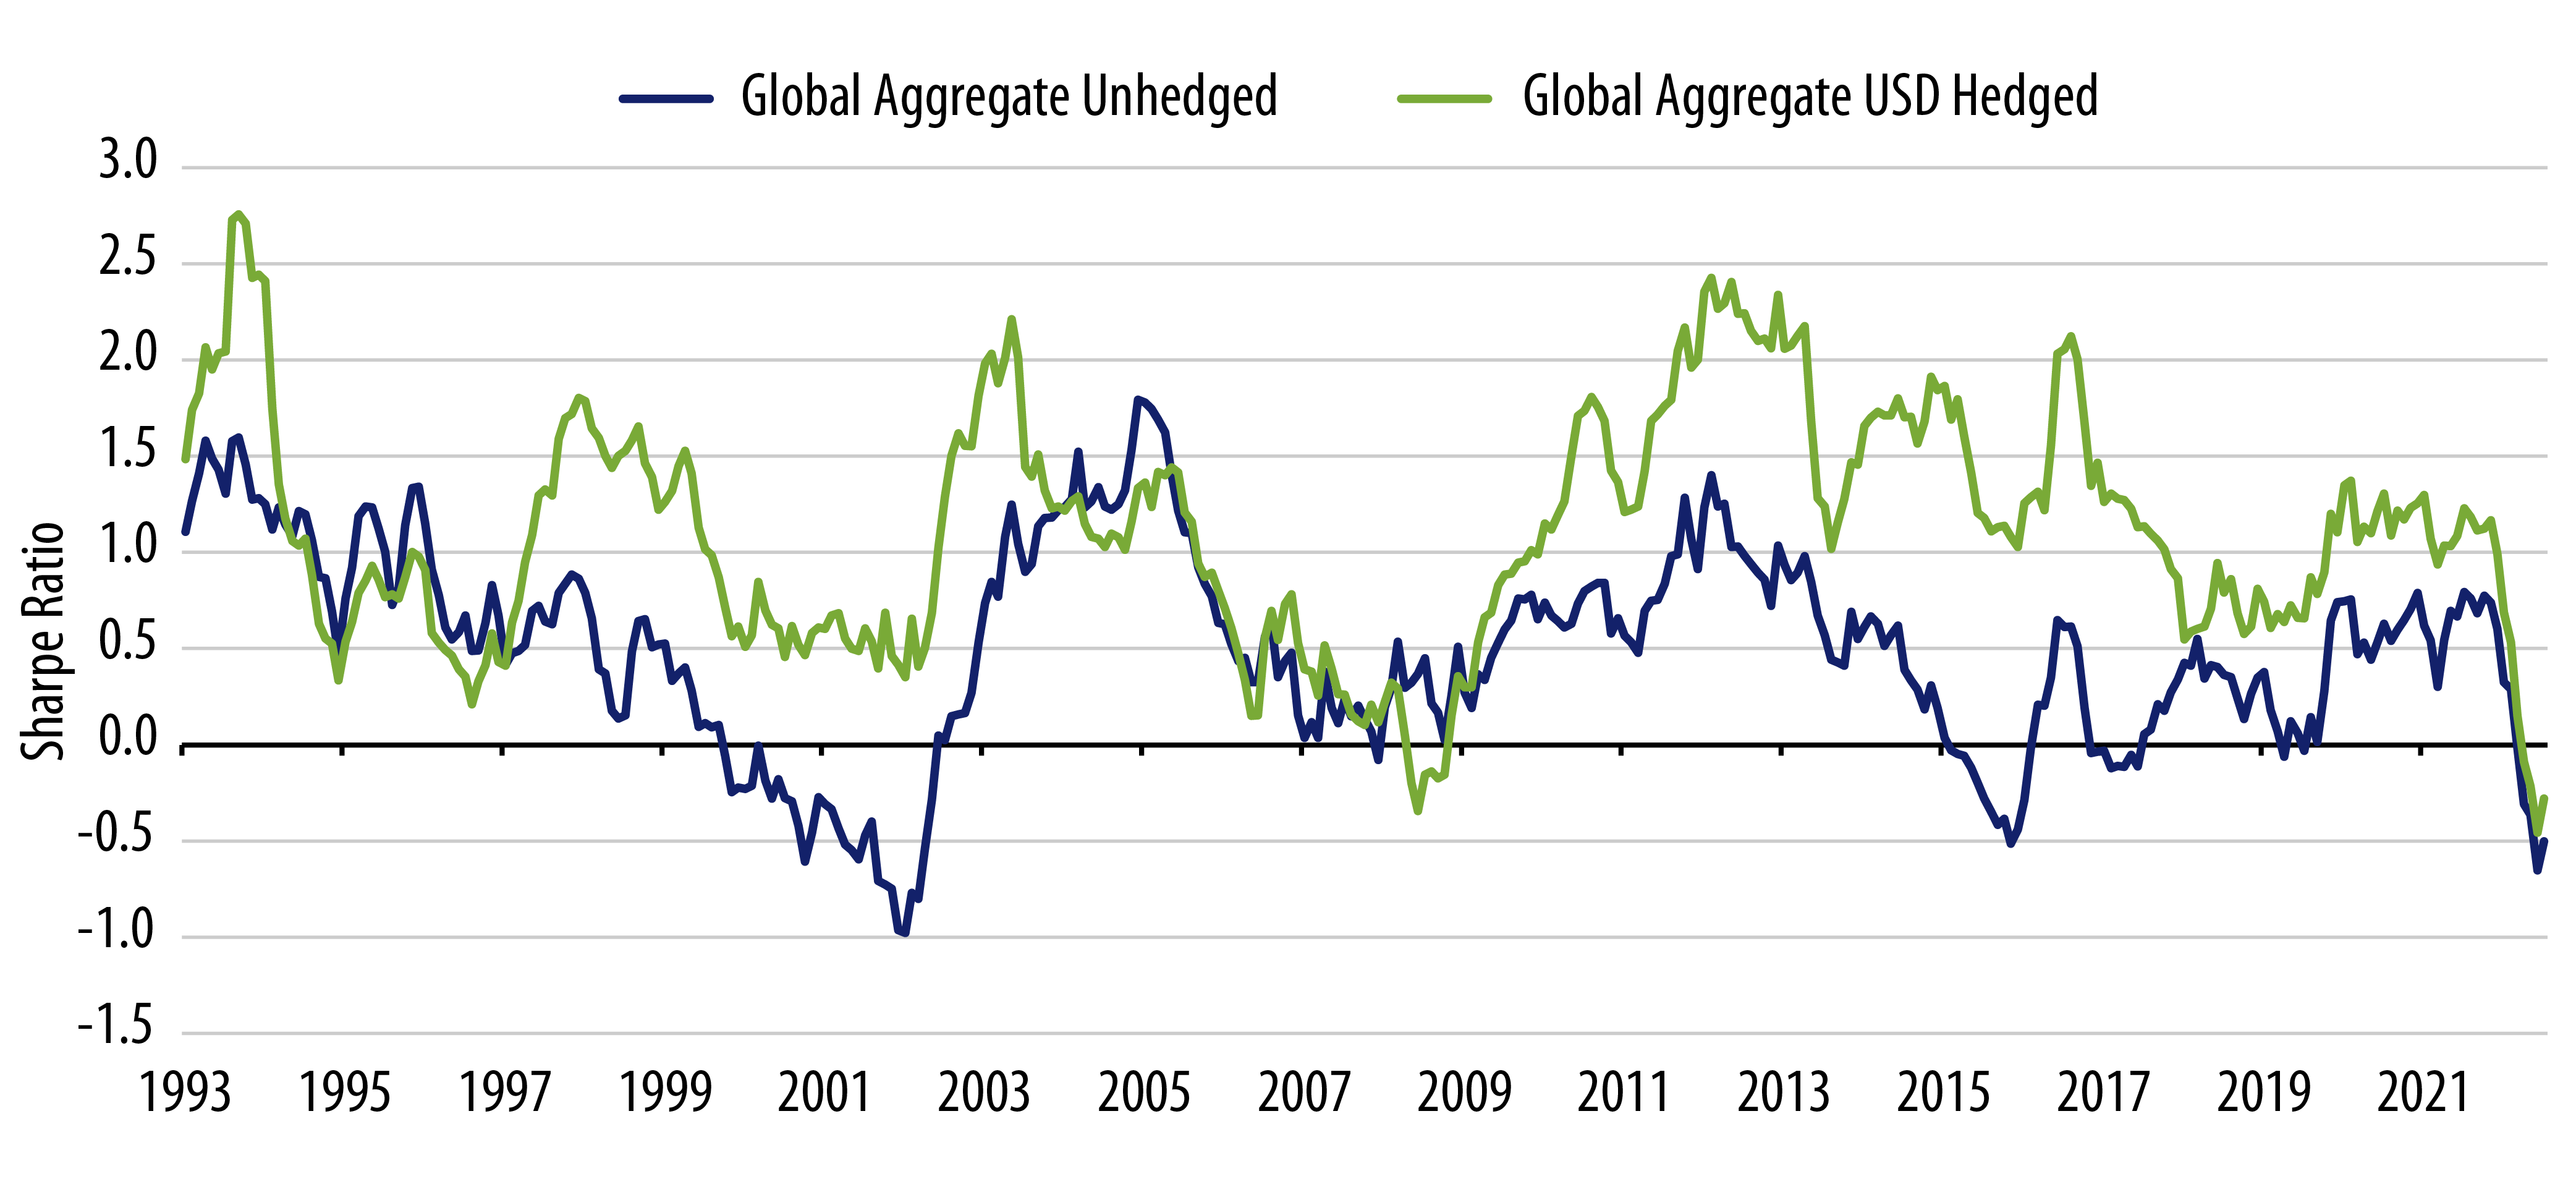 Hedged Bonds Produce Better Risk-Adjusted Returns Over Time (3-Year Rolling Sharpe Ratio)